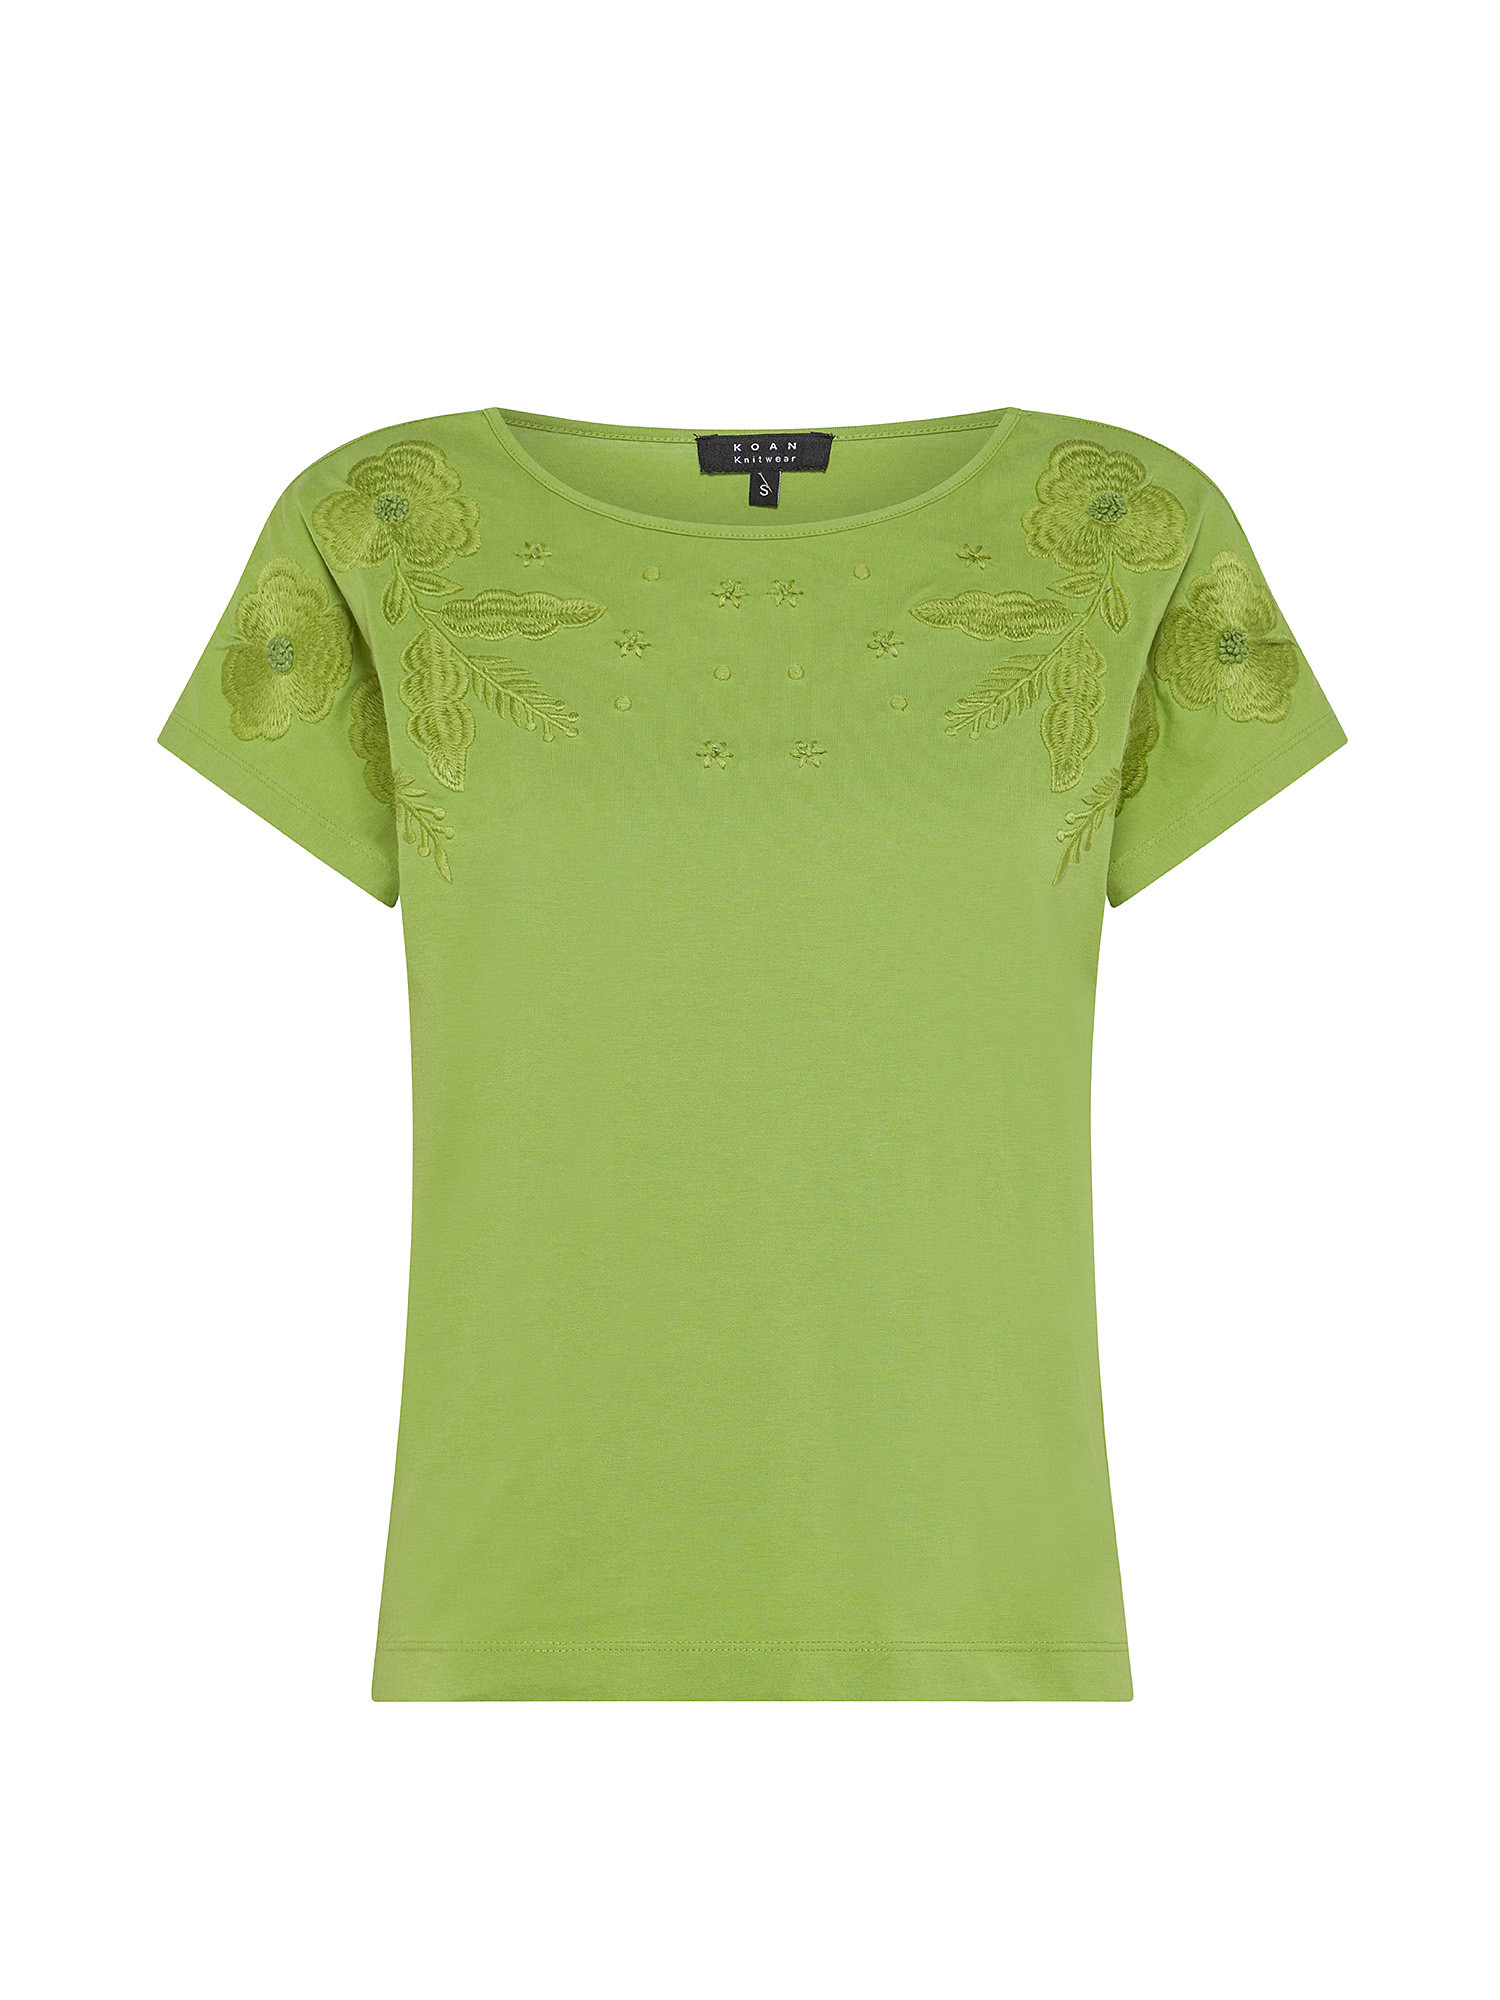 Koan - T-shirt con ricamo, Verde, large image number 0